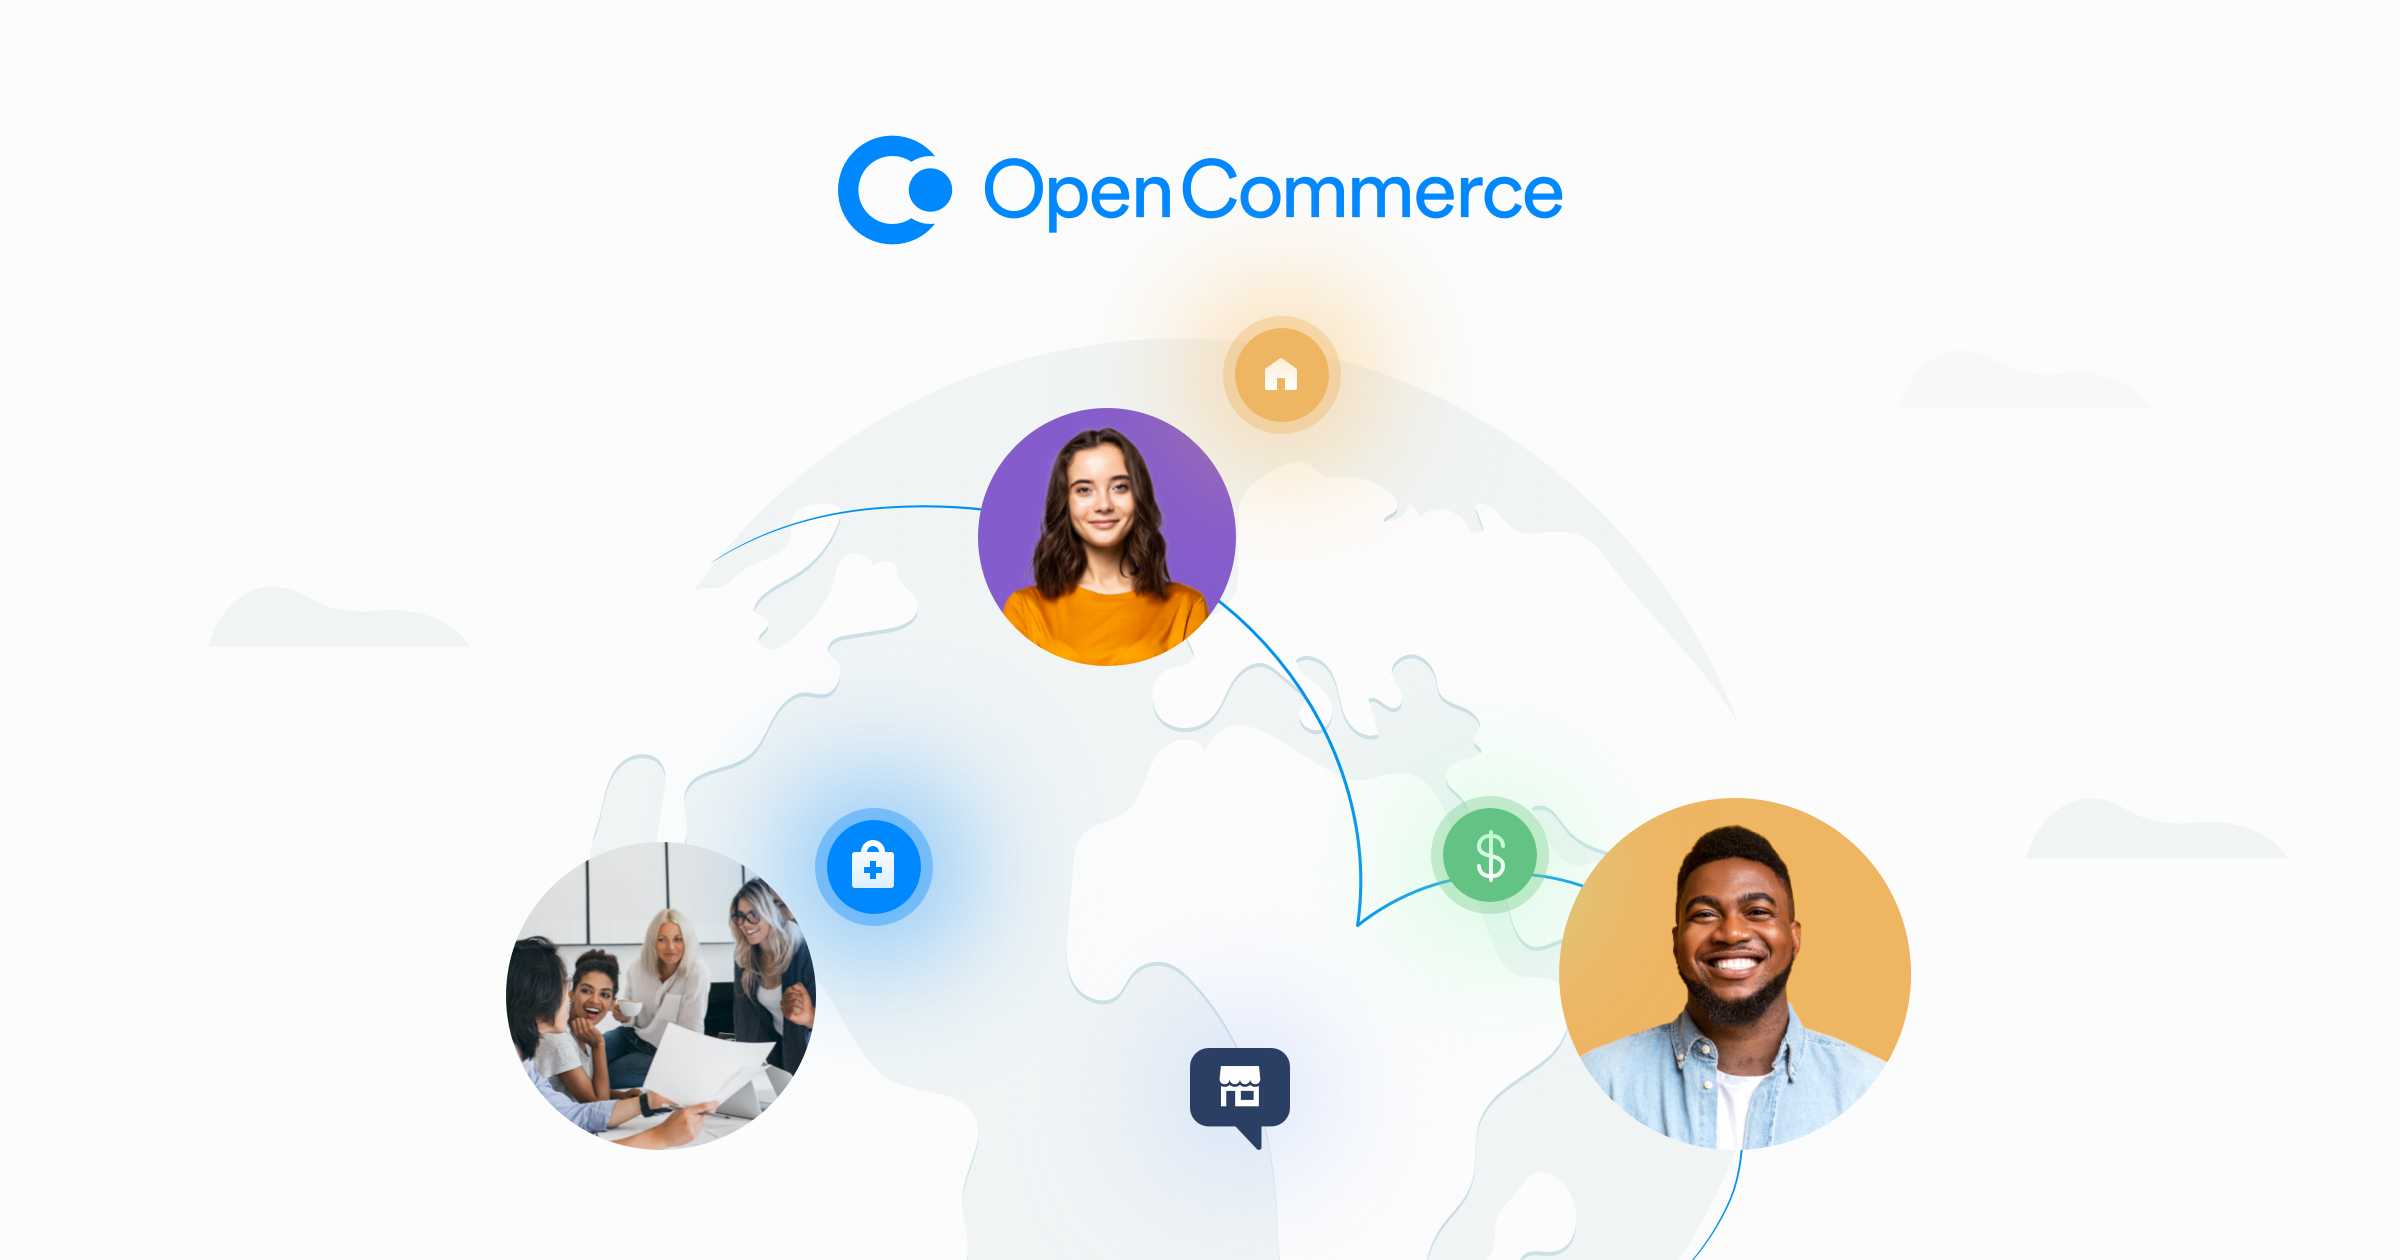 OpenCommerce Group | The Leader in Cross-border Commerce